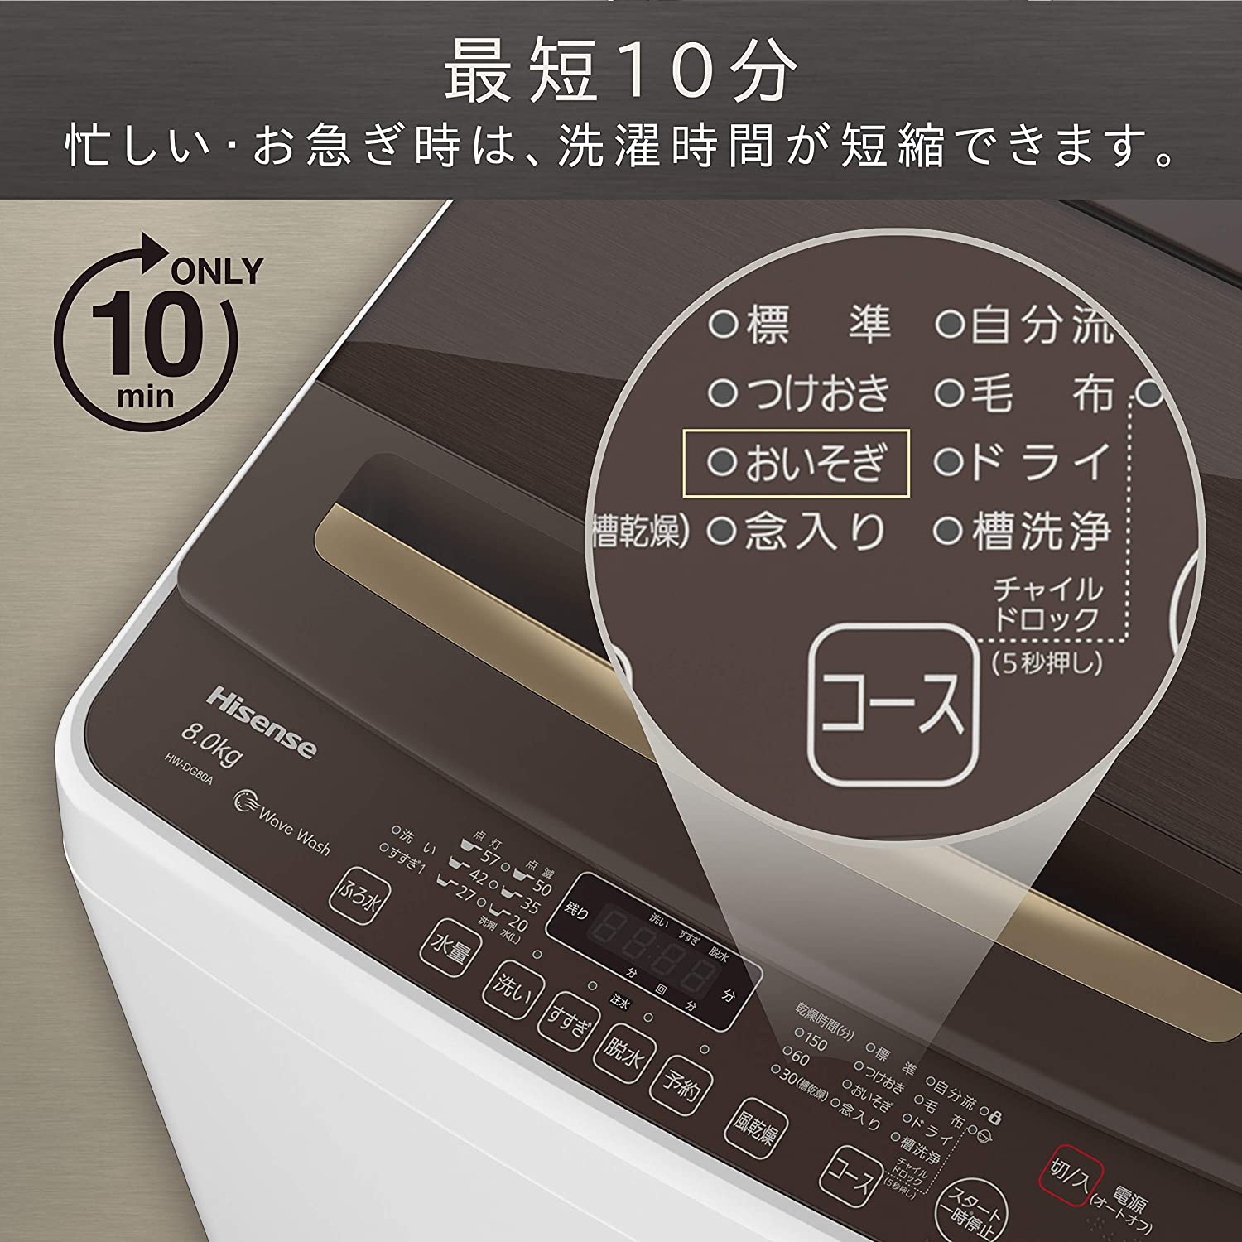 Hisense(ハイセンス) 全自動洗濯機 HW-DG80Aの商品画像3 